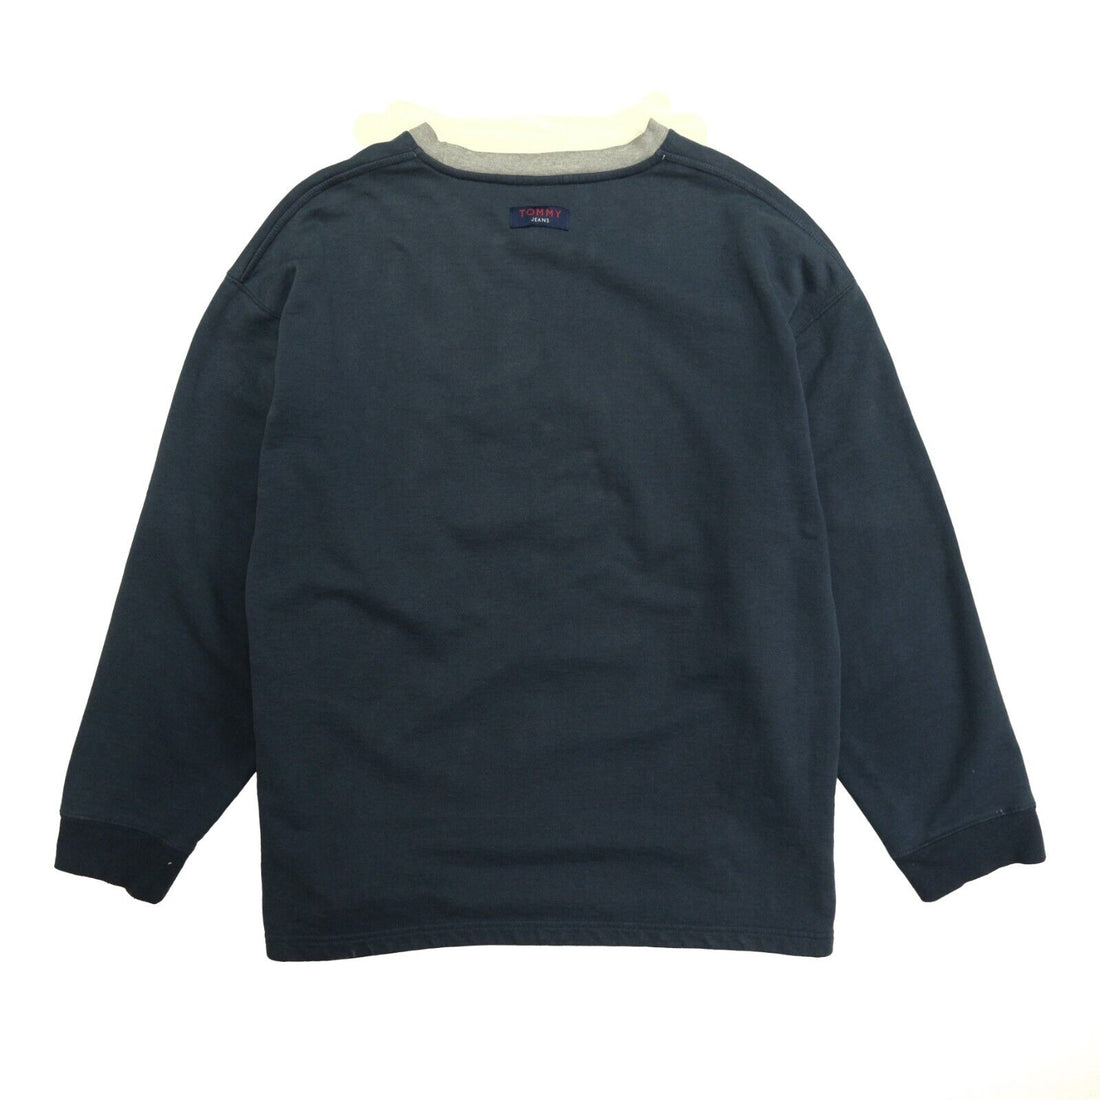 Vintage Tommy Hilfiger Jeans Sweatshirt Crewneck Size 2XL Blue Embroidered